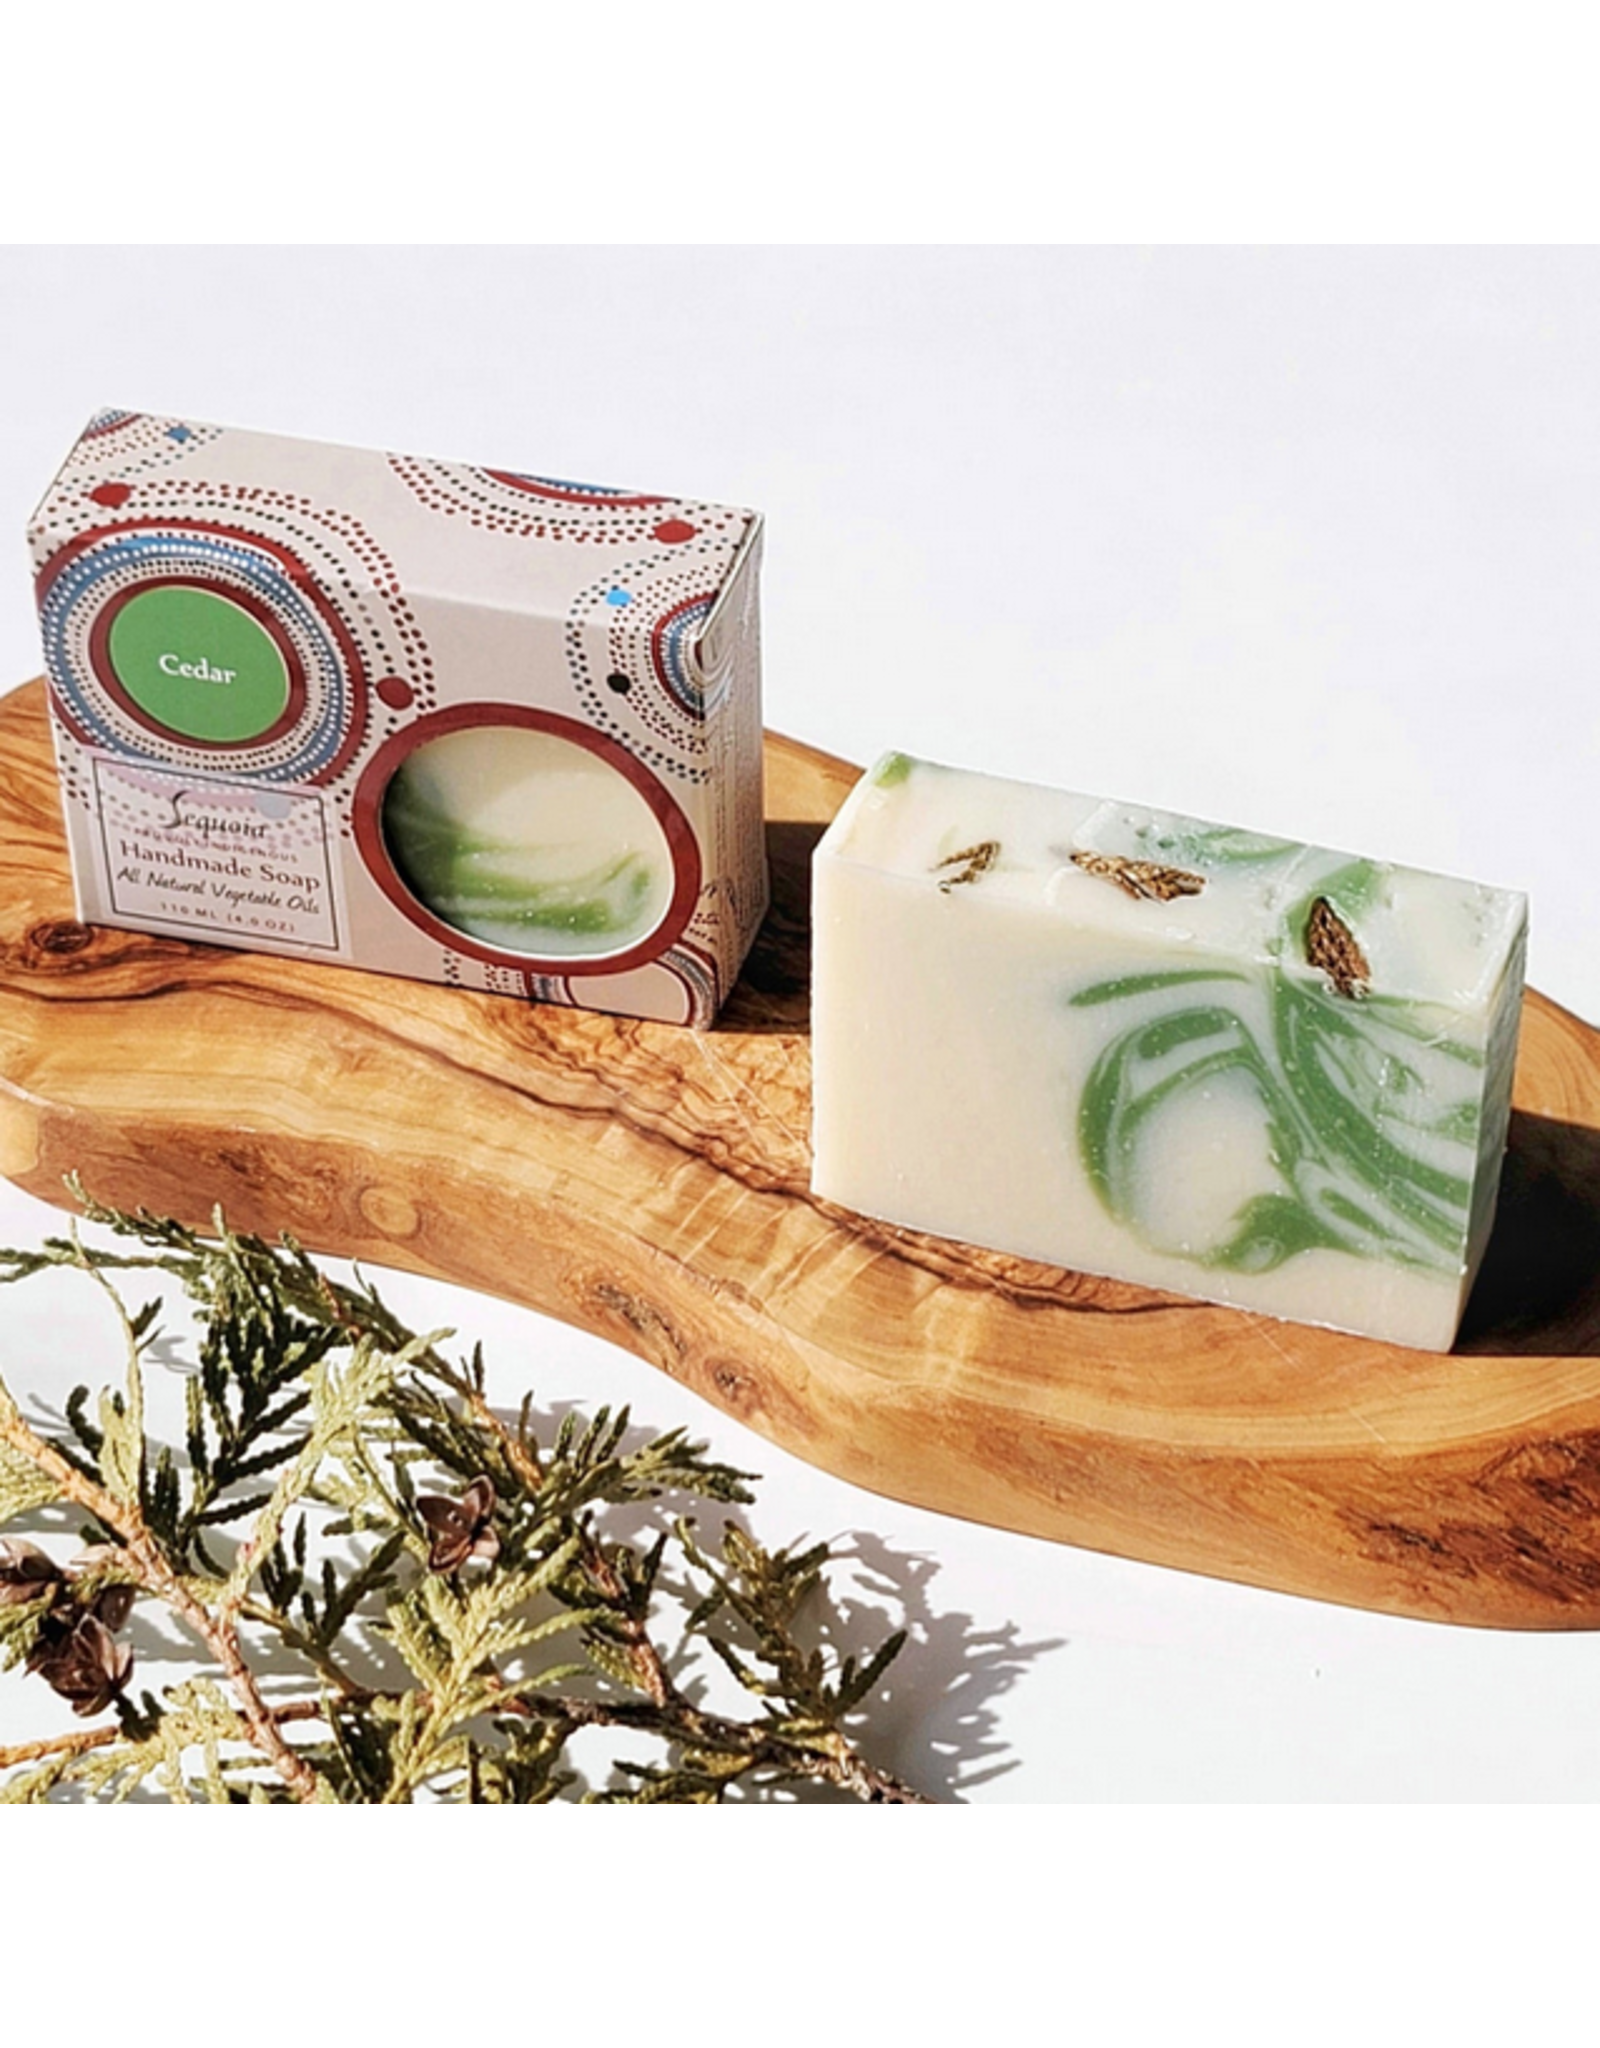 Handmade Soap - Cedar